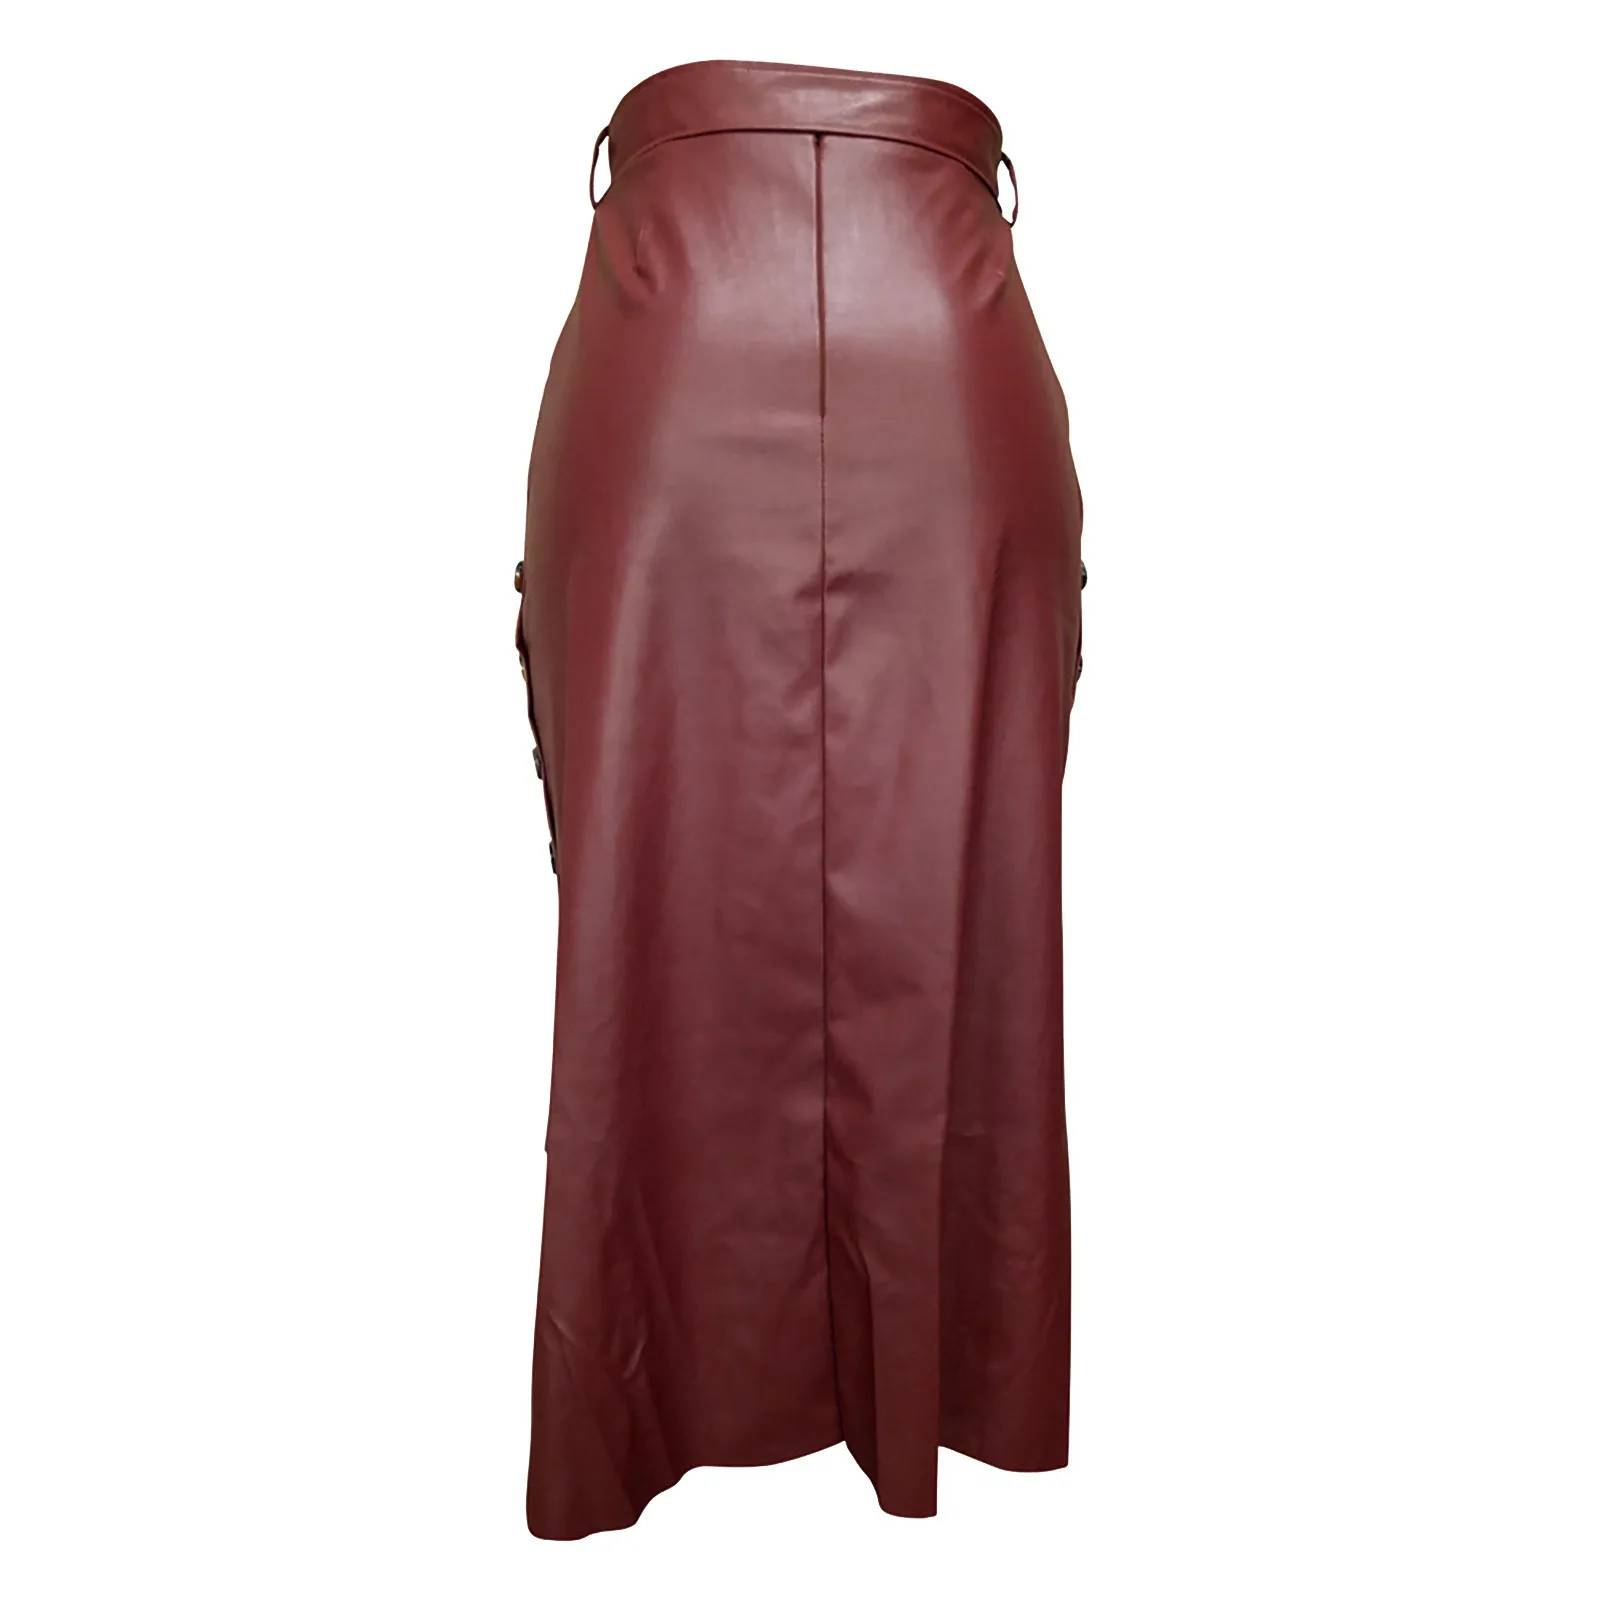 Women'S High Waist Button Trim Solid Color Slit Skinny Leather Midi Pencil Skirt Kawaii Skirts For Women Mini Skirt Y2k Style